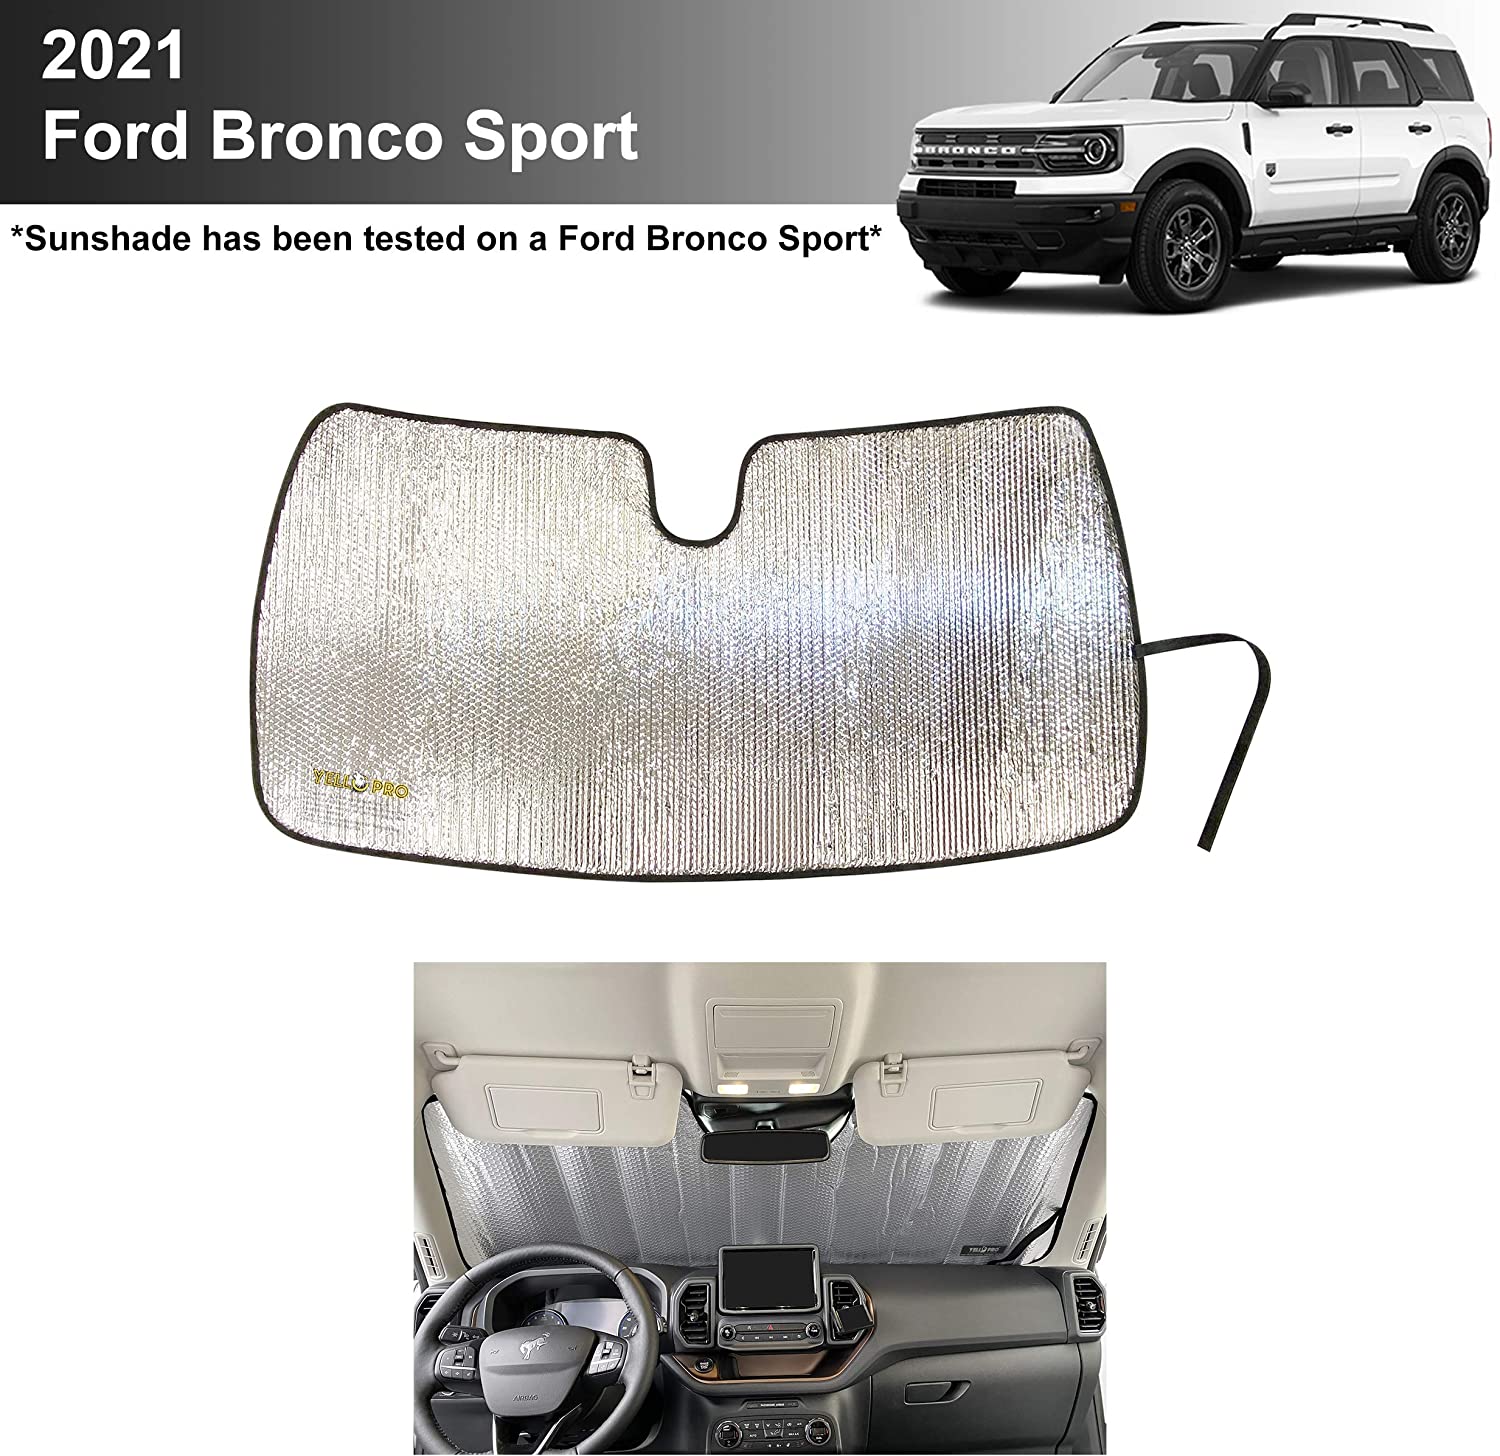 Ford Bronco Sport Links: 2021 Bronco Sport Accessory/Part List. Enjoy! 916gTGGF6bL._AC_SL1500_